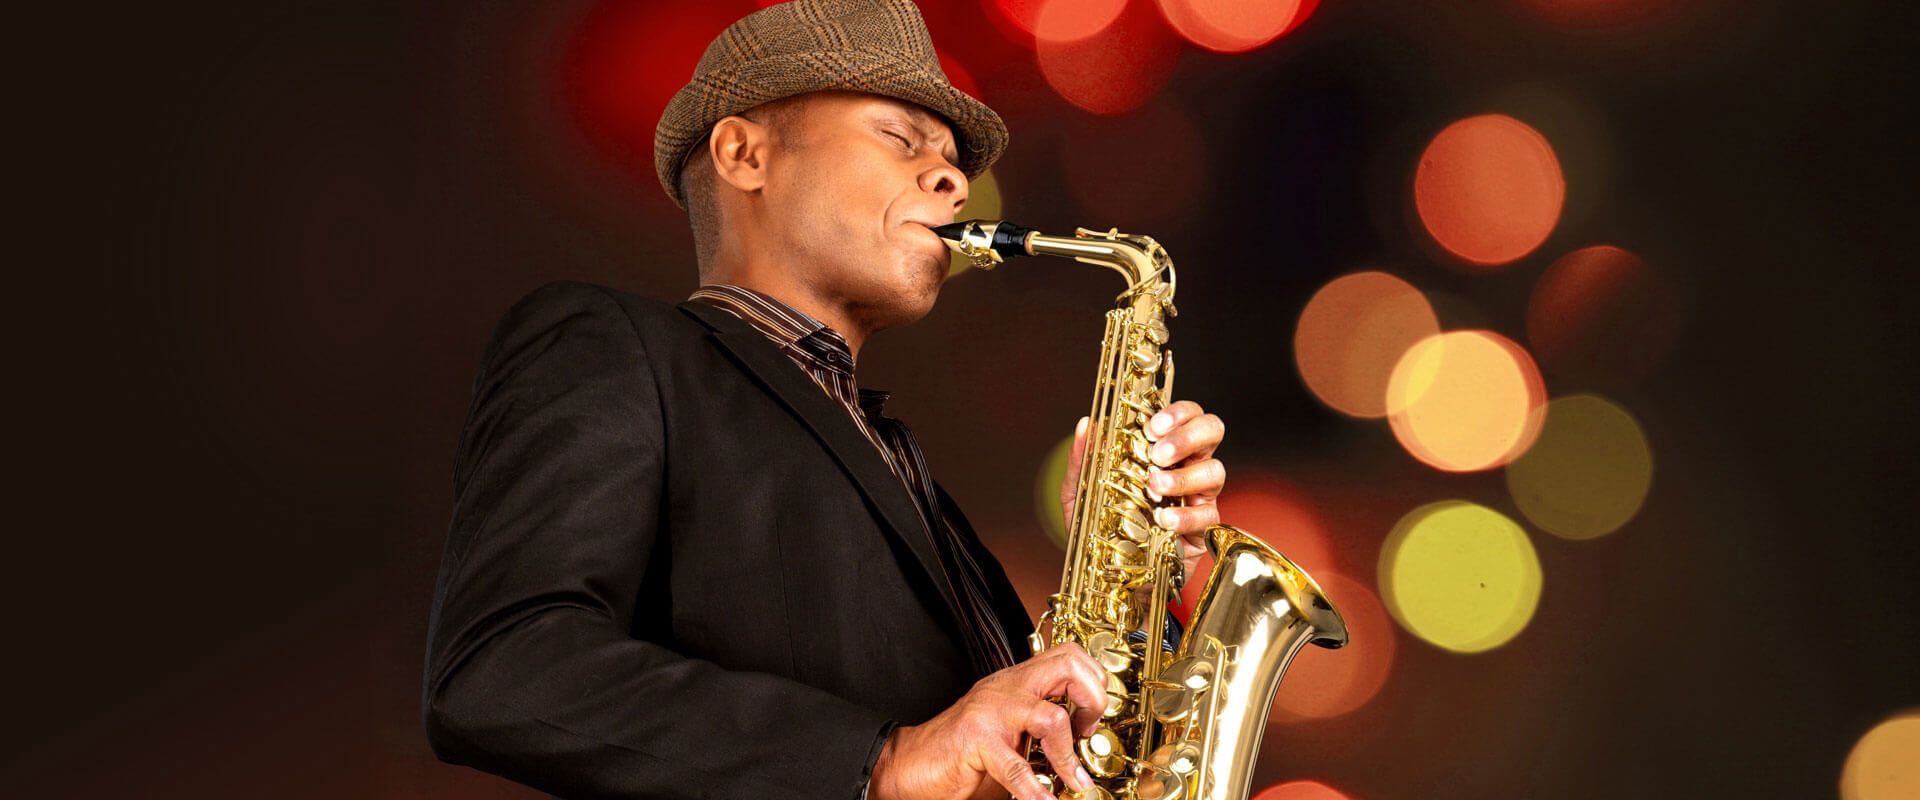 Saxophone Lessons Seattle, WA